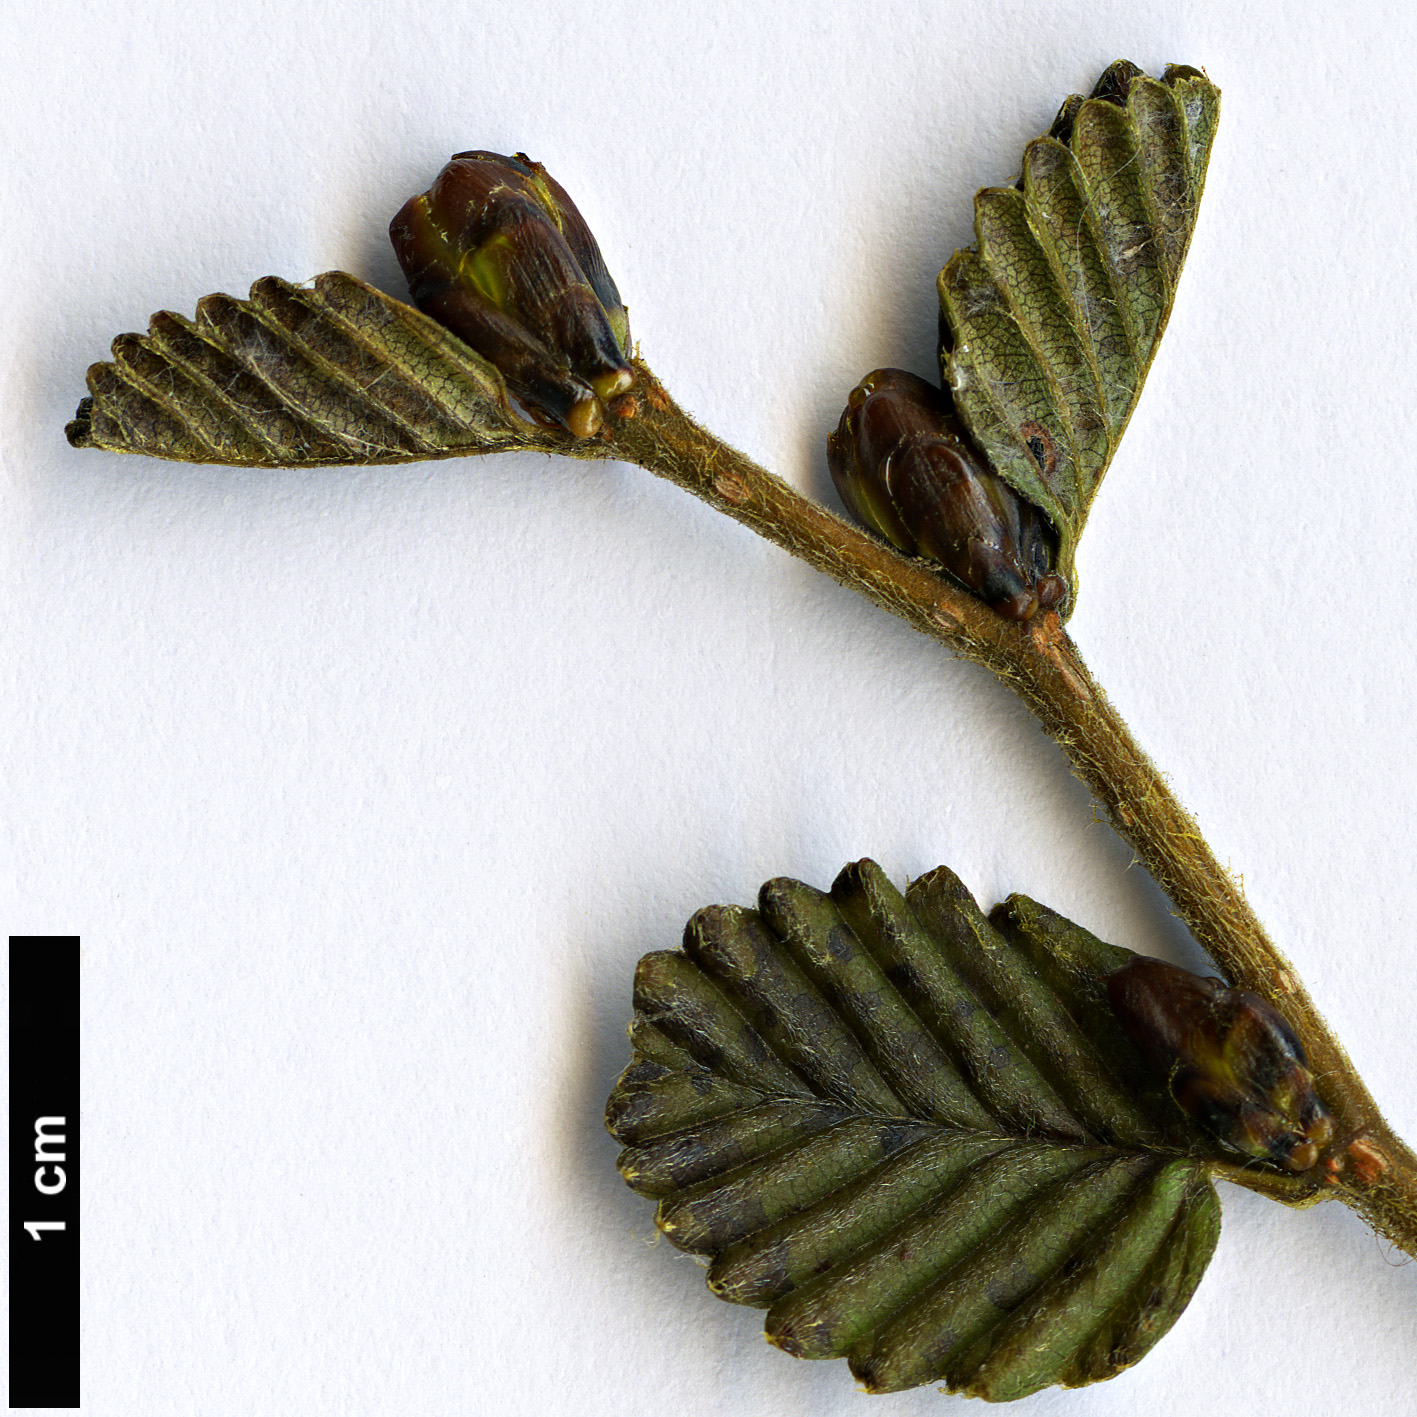 High resolution image: Family: Nothofagaceae - Genus: Nothofagus - Taxon: gunnii